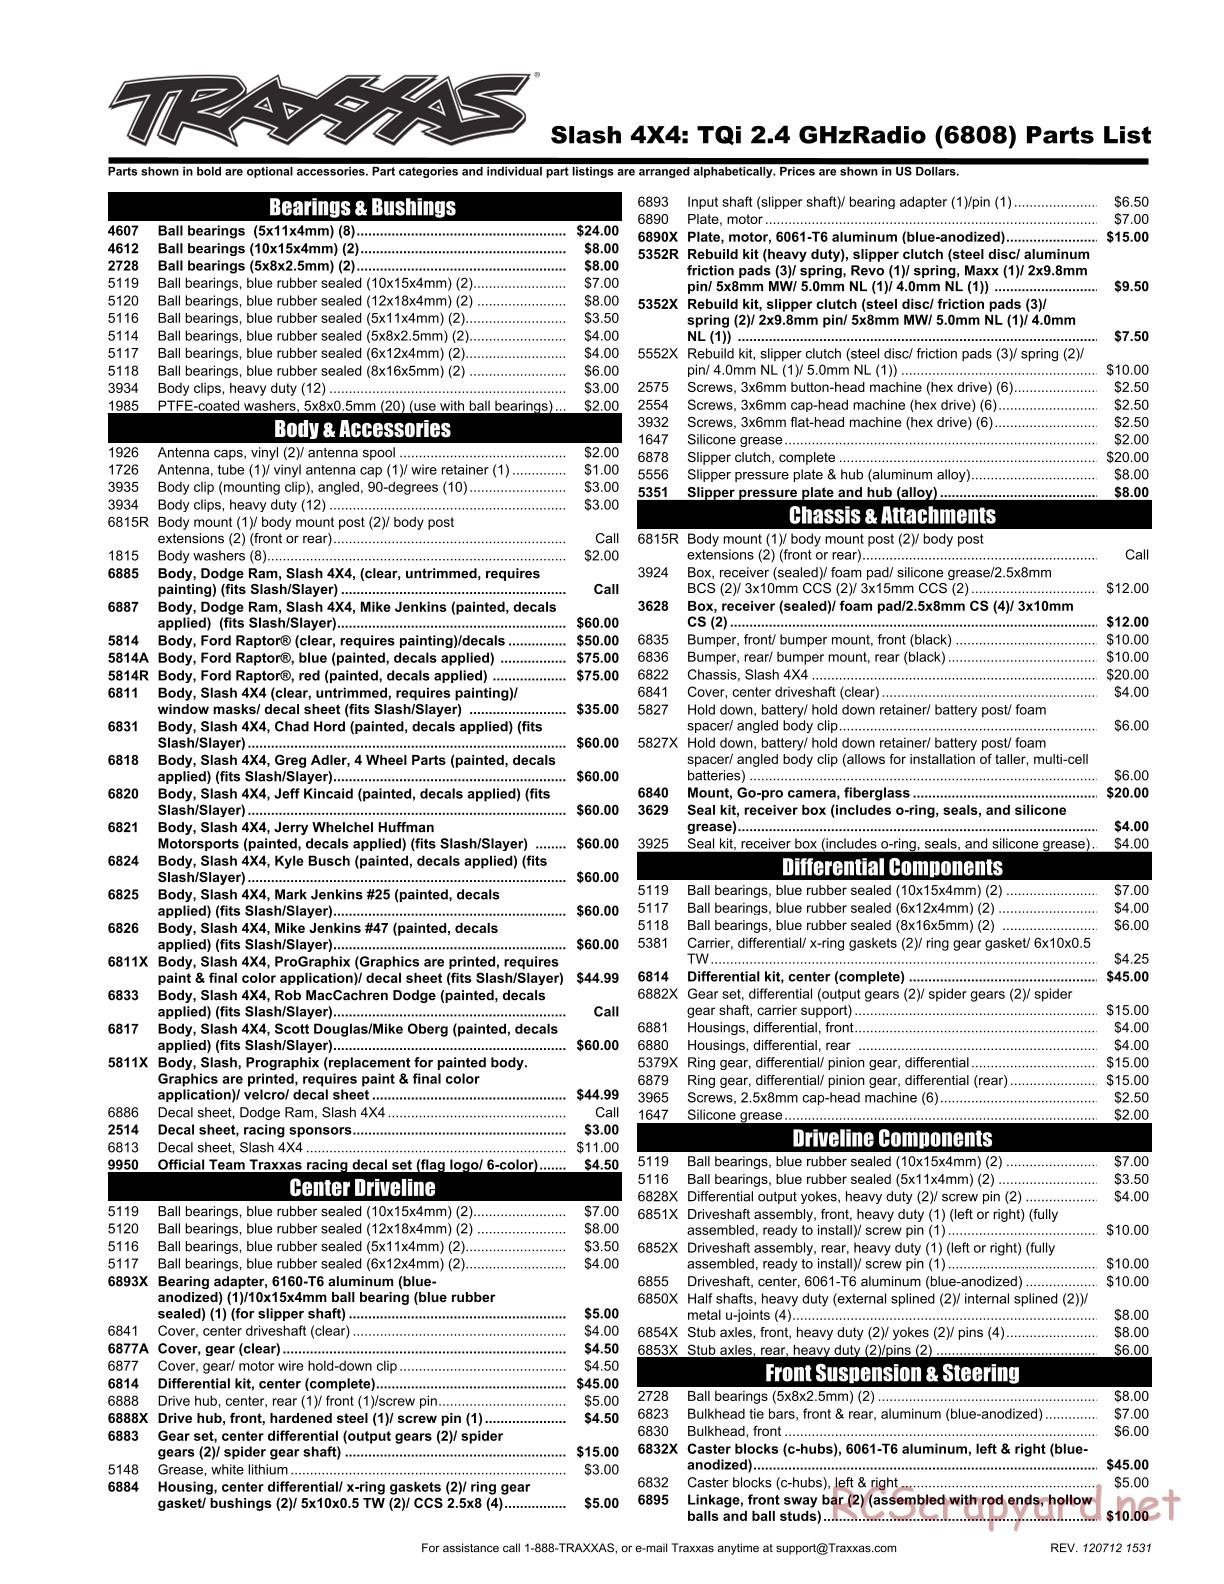 Traxxas - Slash 4x4 - Parts List - Page 1